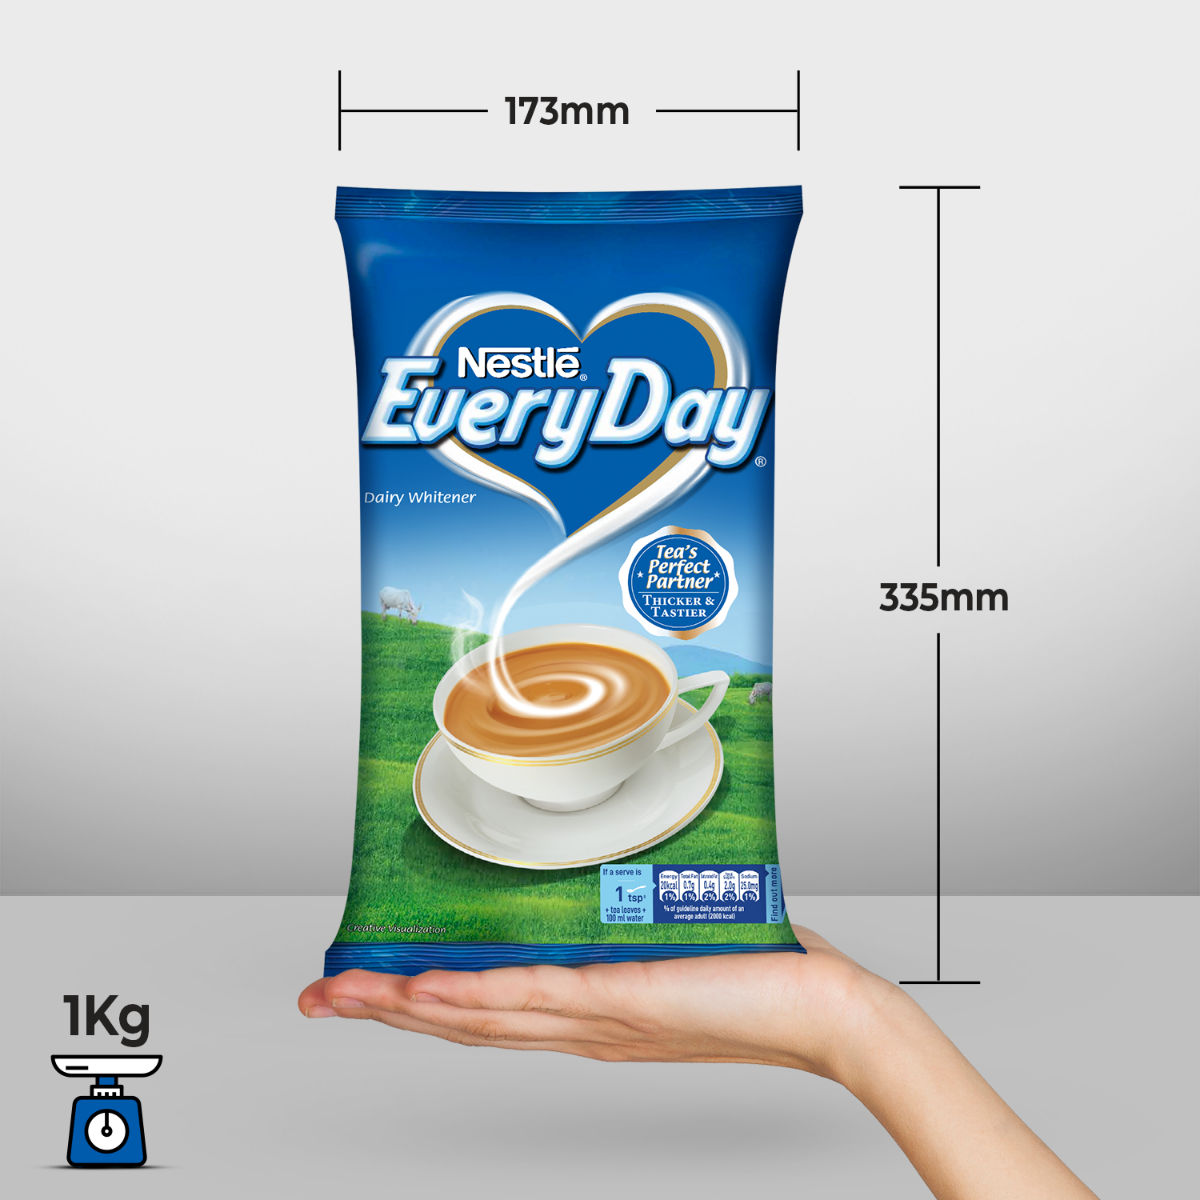 Nestle Everyday Dairy Whitener Powder, 1 kg, Pack of 1 